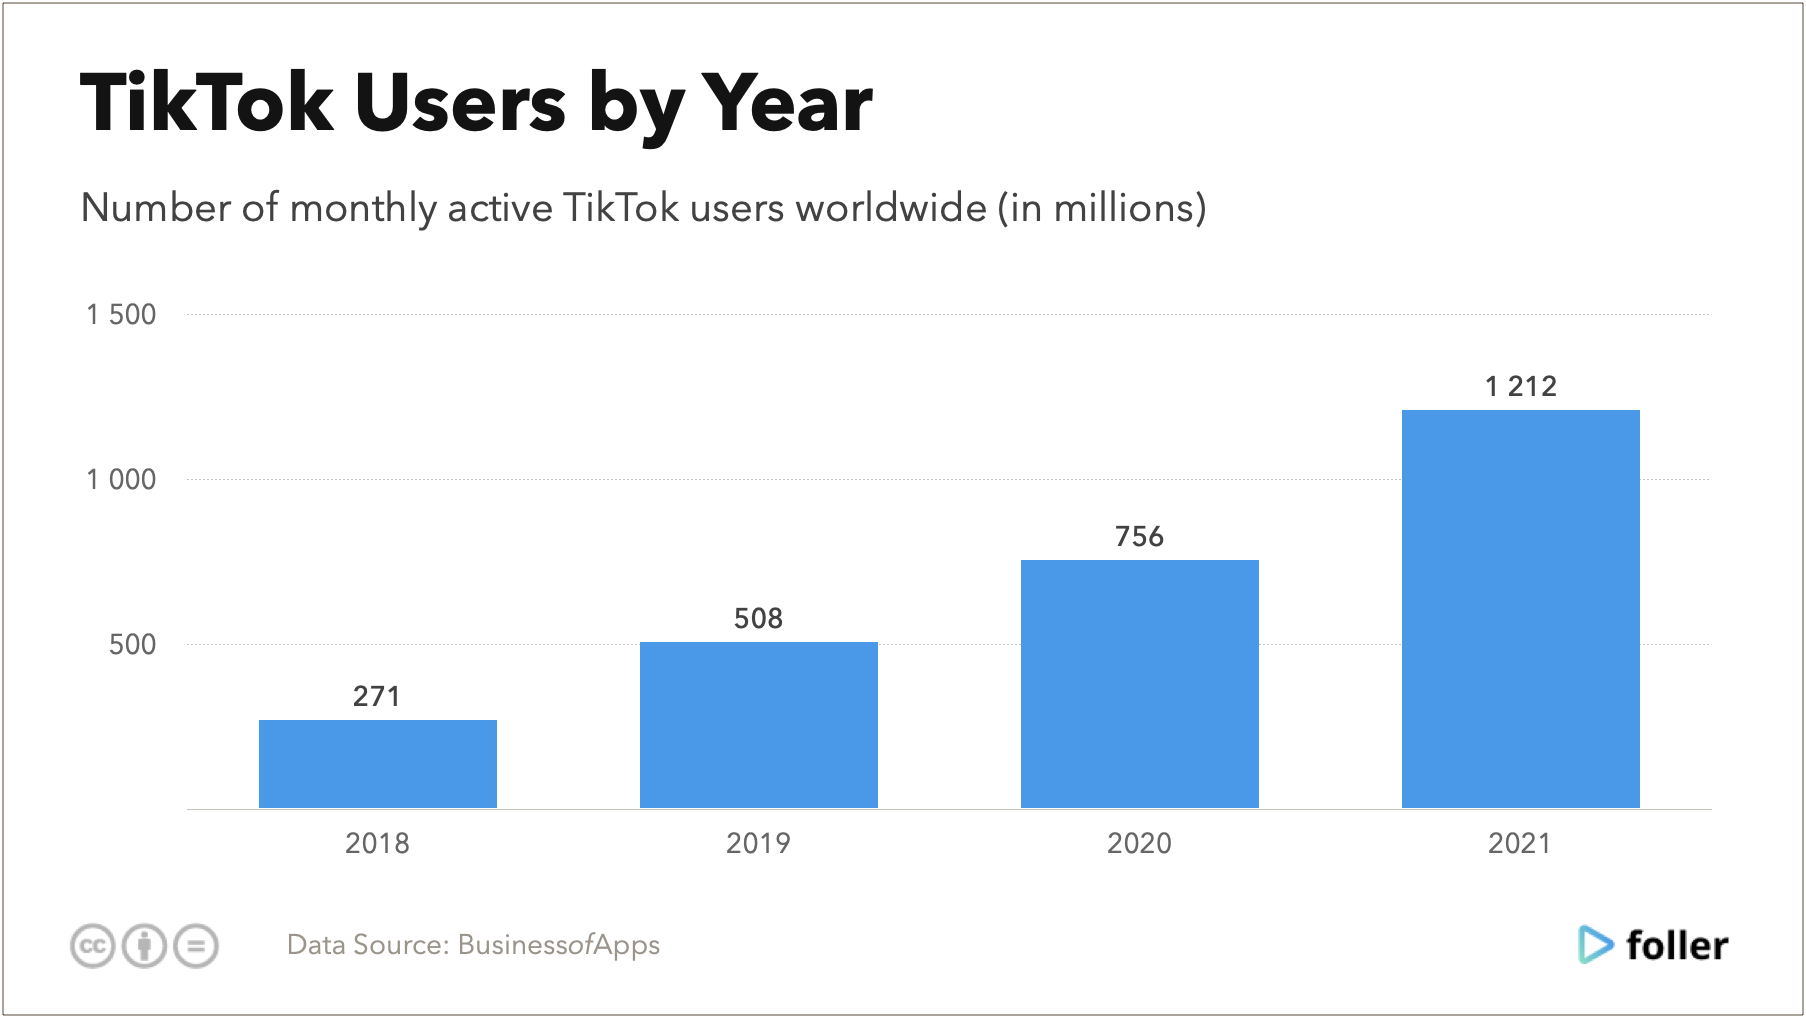 TikTok userss statistics. TikTok users by year.